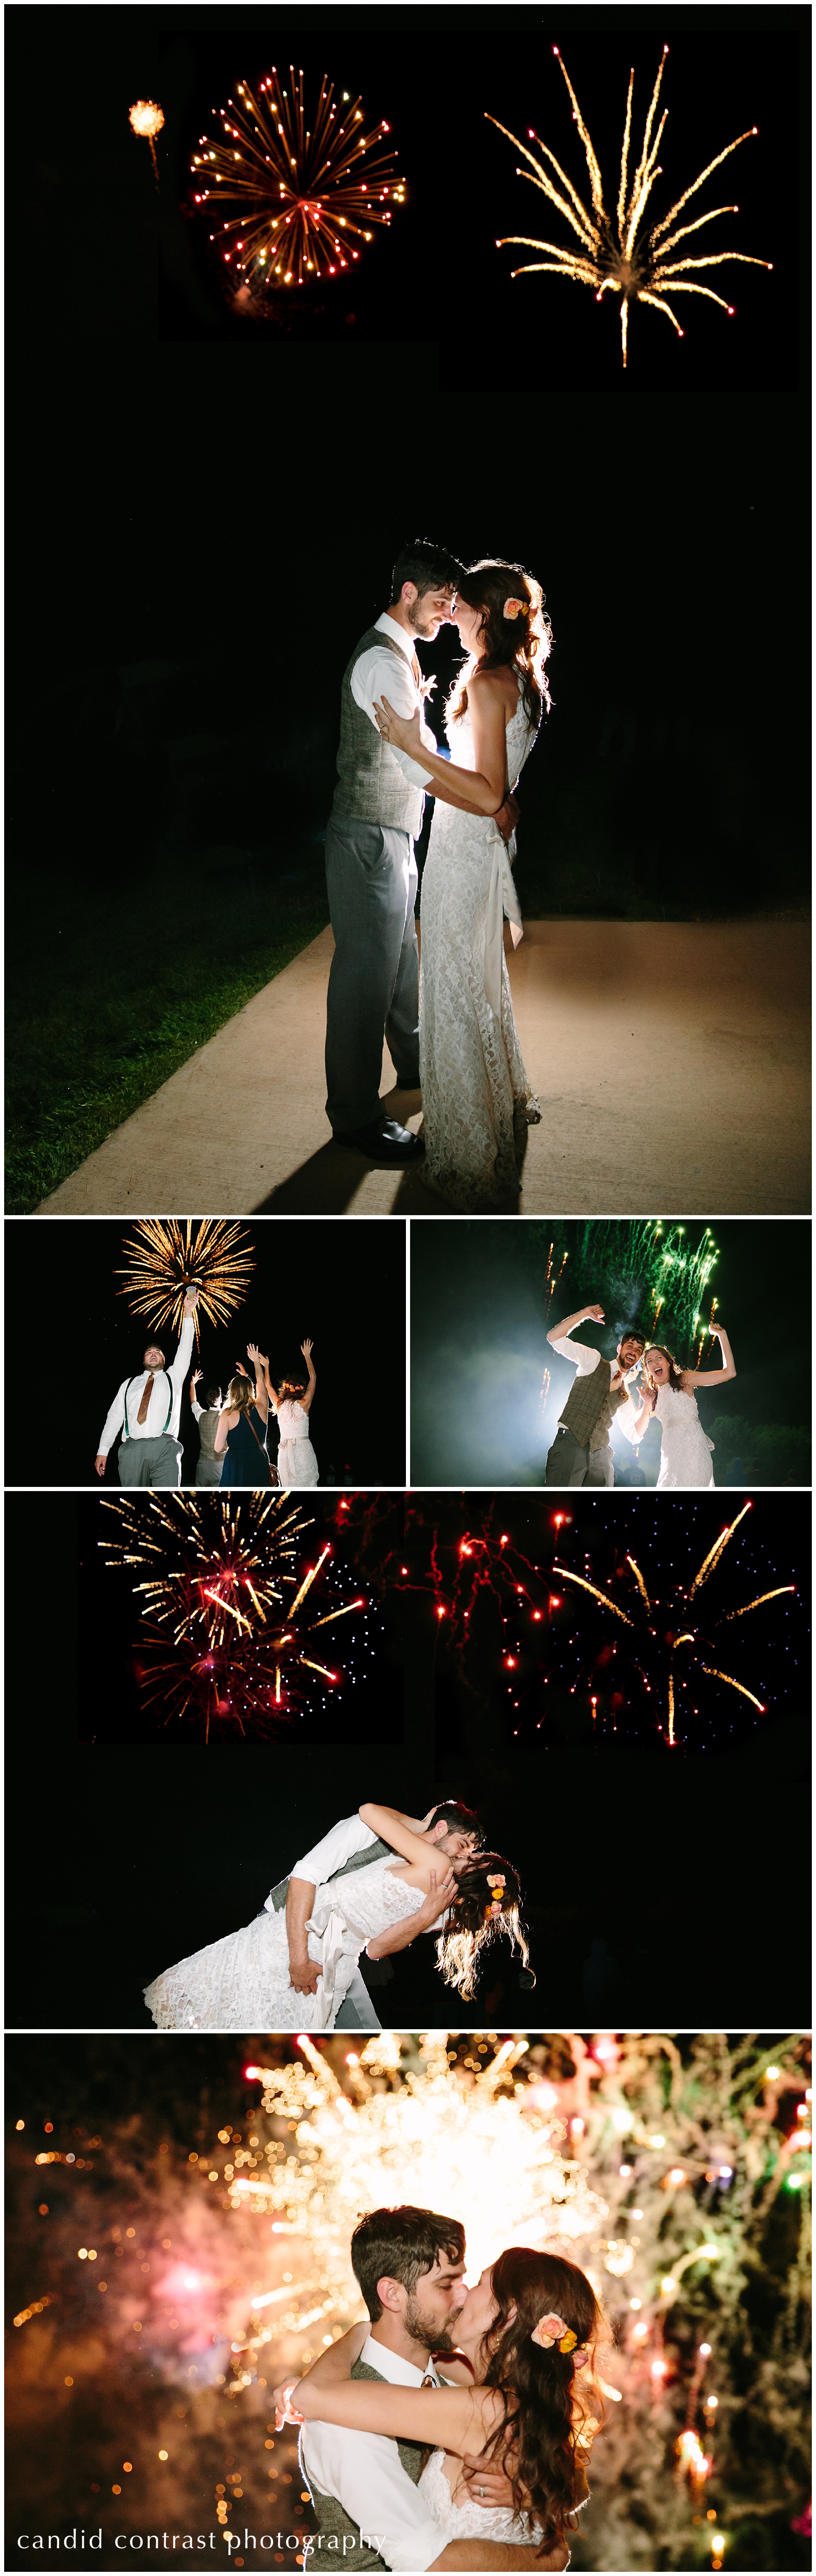 dubuque iowa wedding photographer, fireworks at wedding reception, bride and groom with fireworks, barn wedding